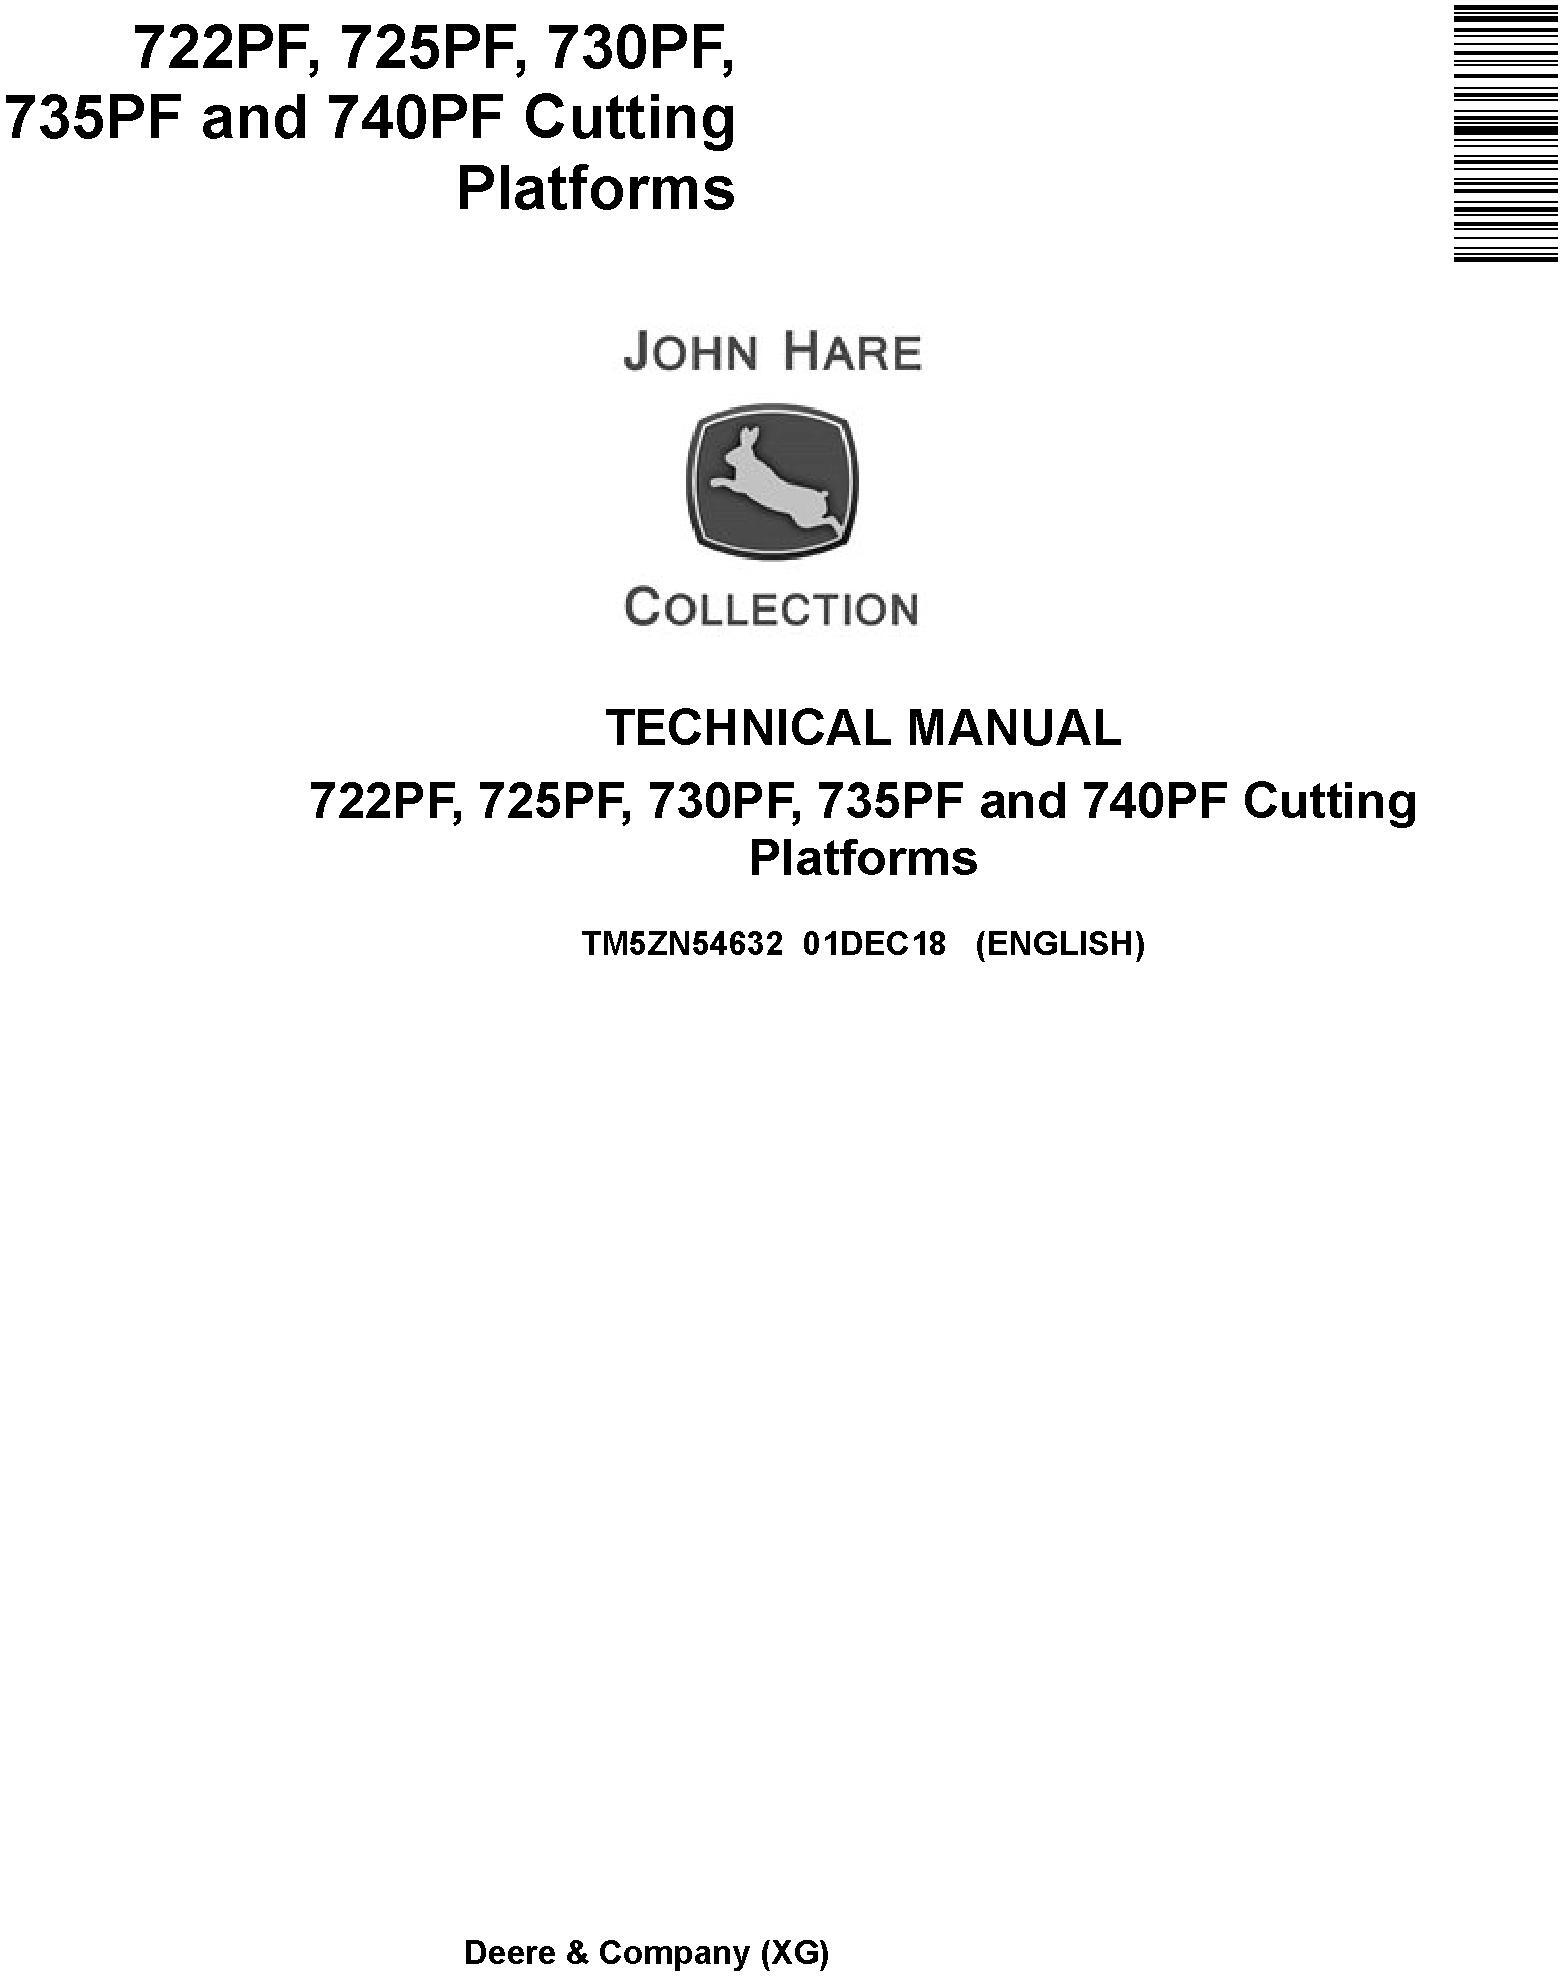 John Deere 722PF to 740PF Cutting Platforms Technical Manual TM5ZN54632